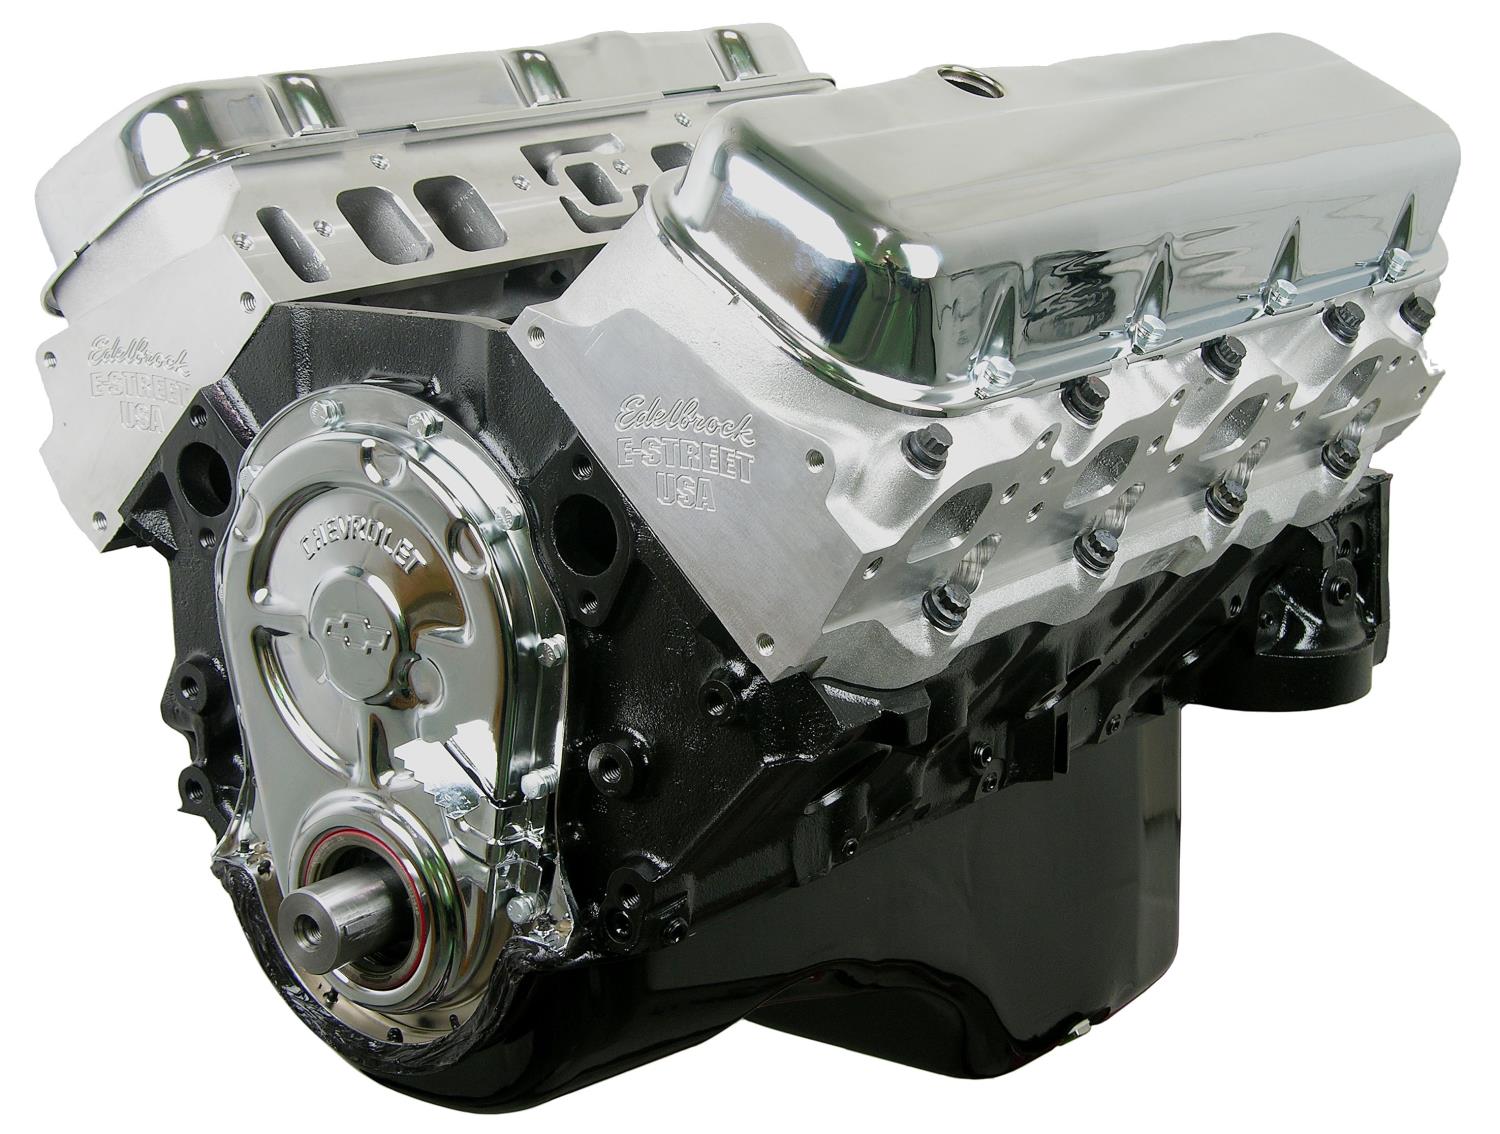 HP451P High Performance Crate Engine Big Block Chevy 454ci / 525HP / 550TQ